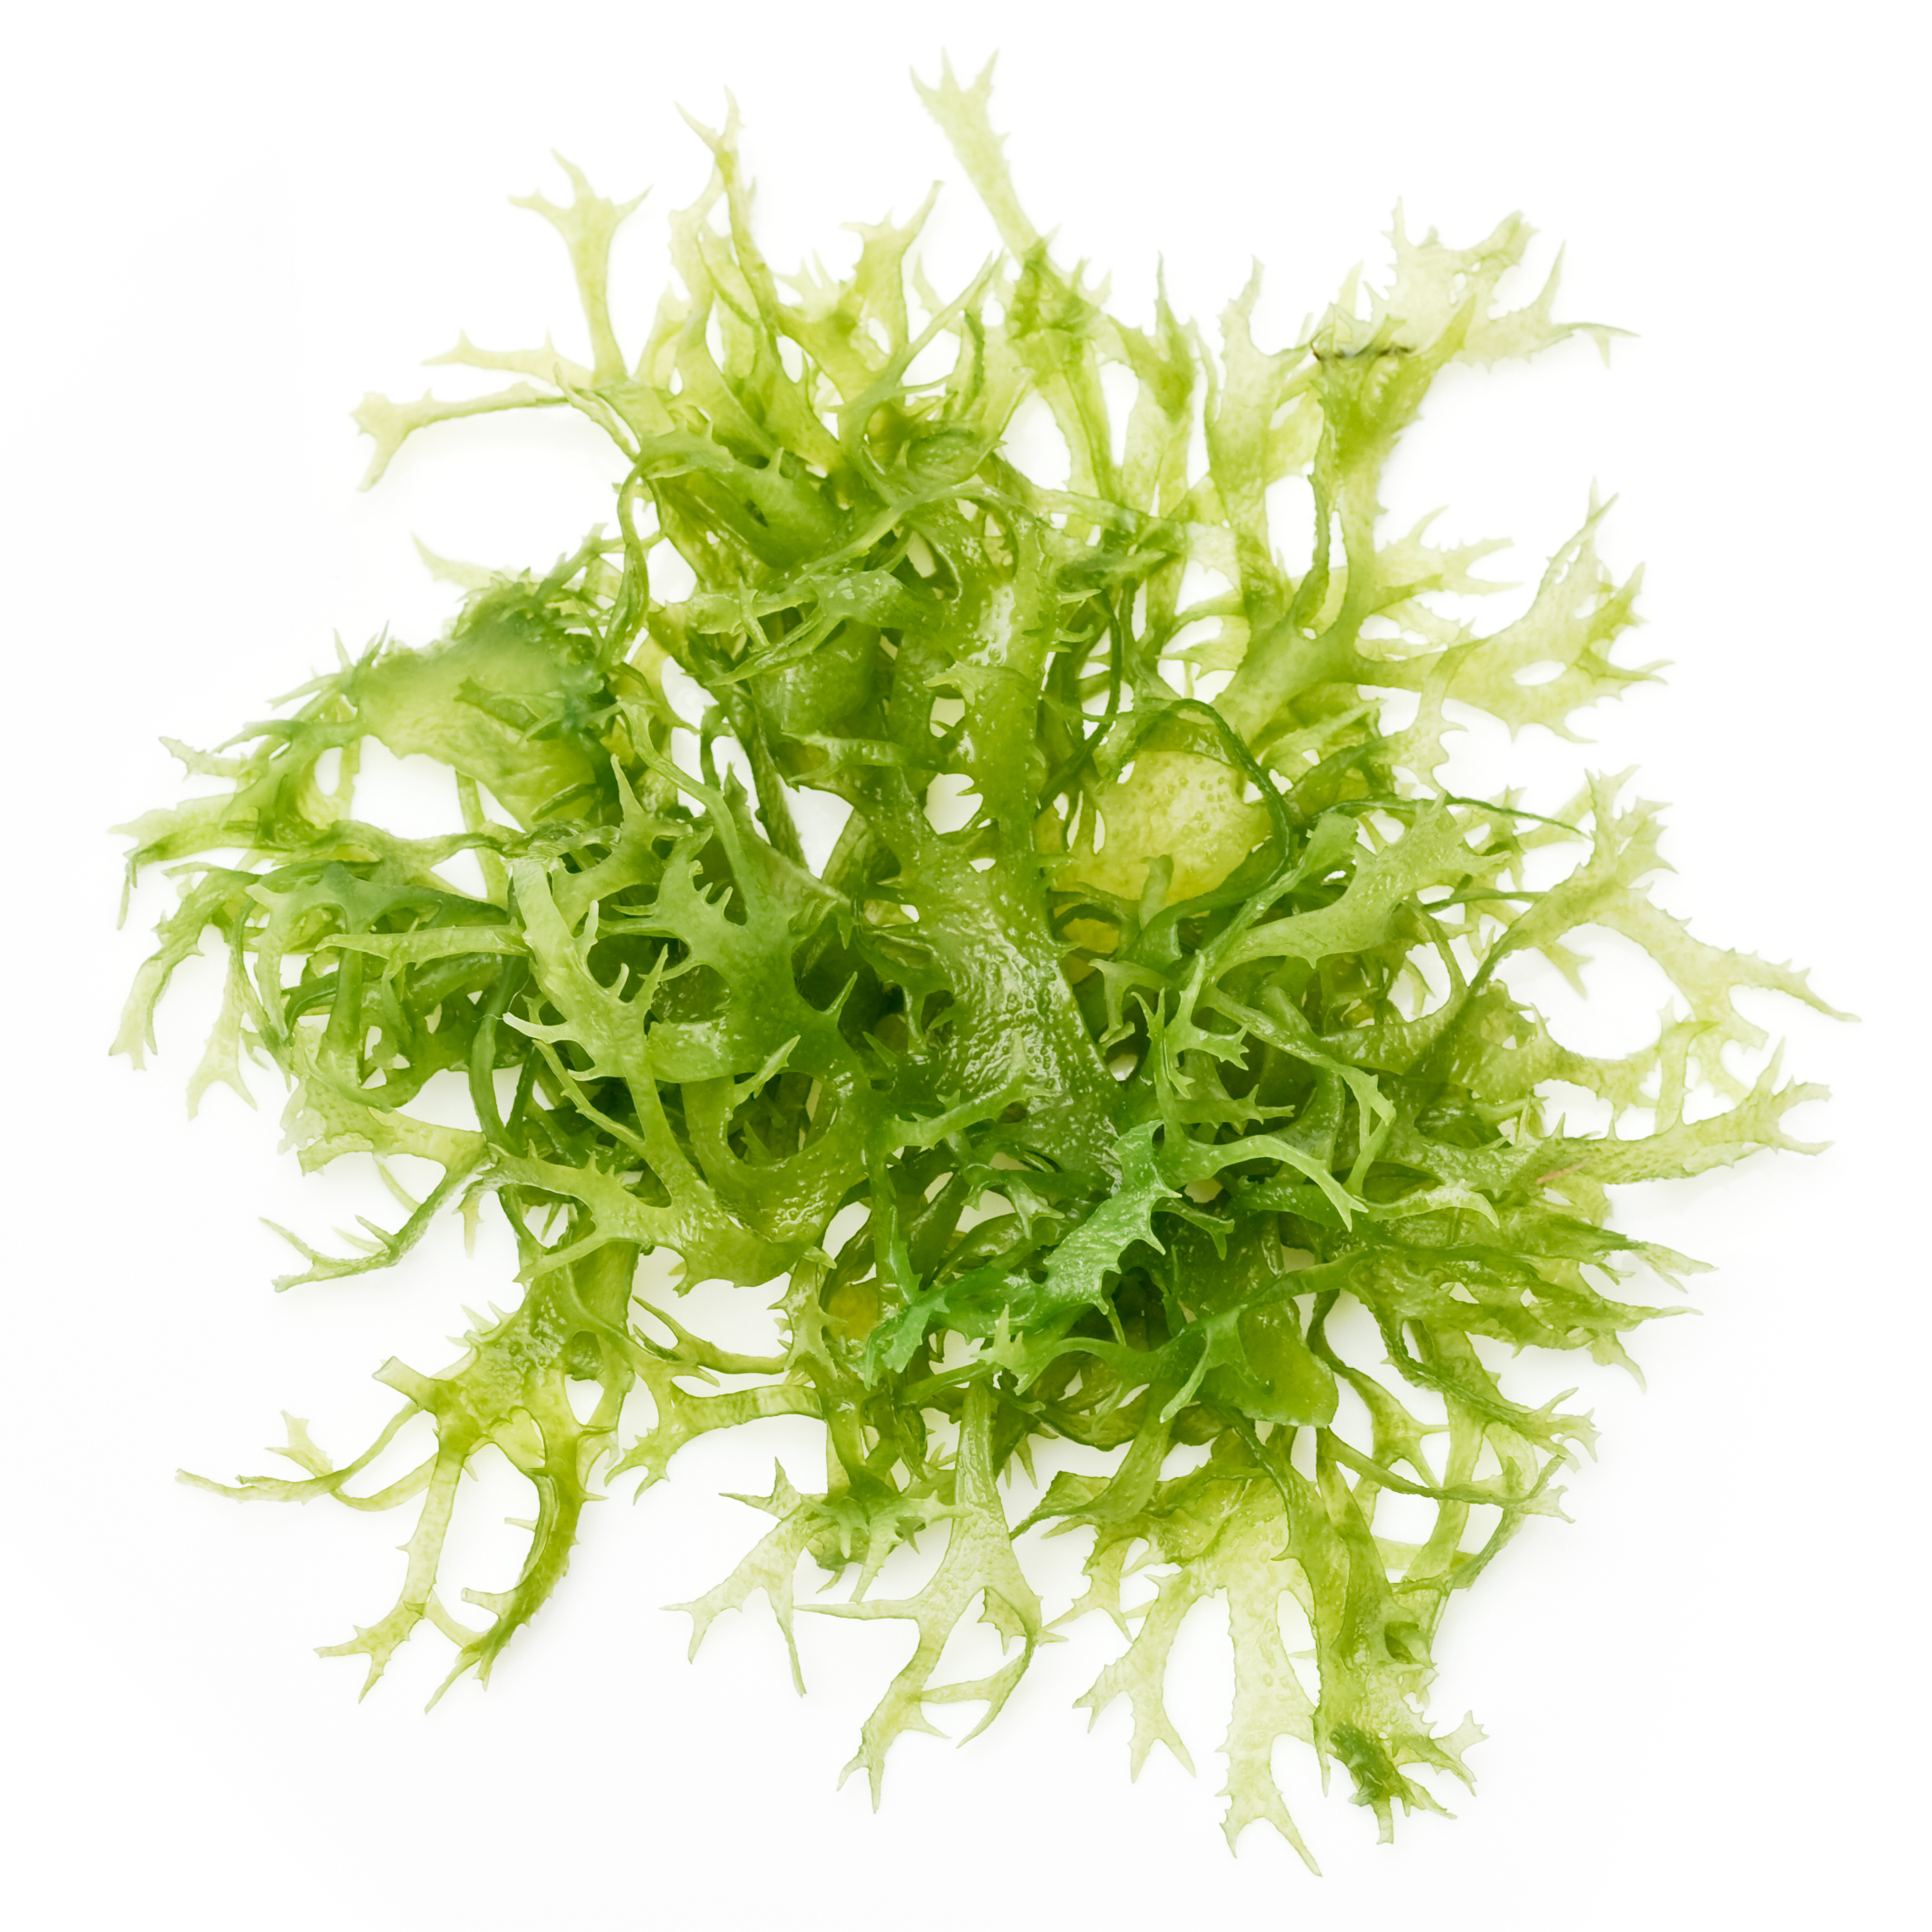 Green Algae Clipart image